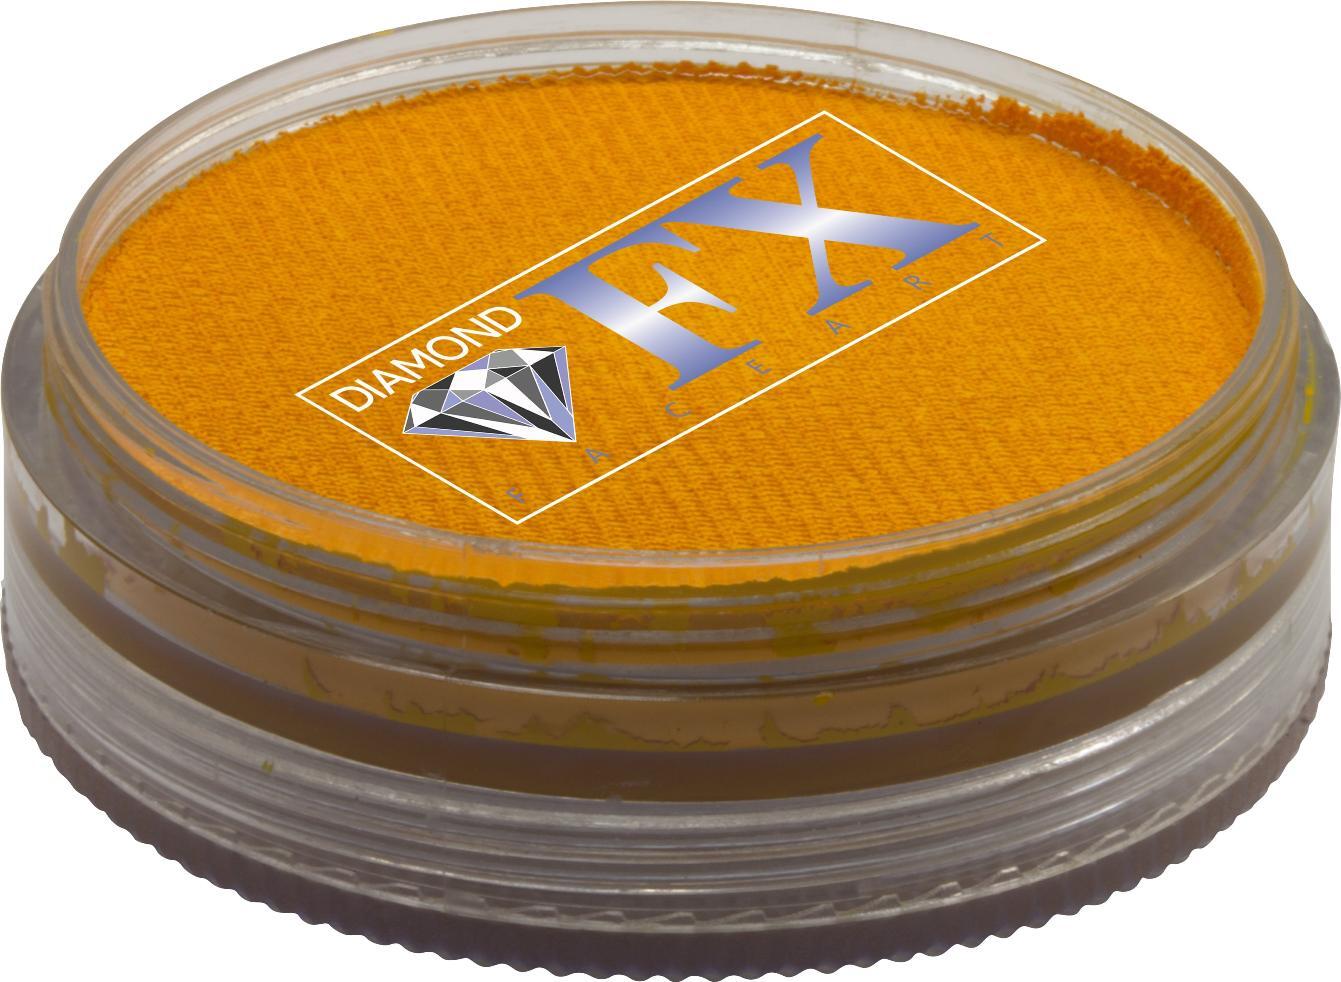 Diamond FX Yellow/Orange 45g - Small Image